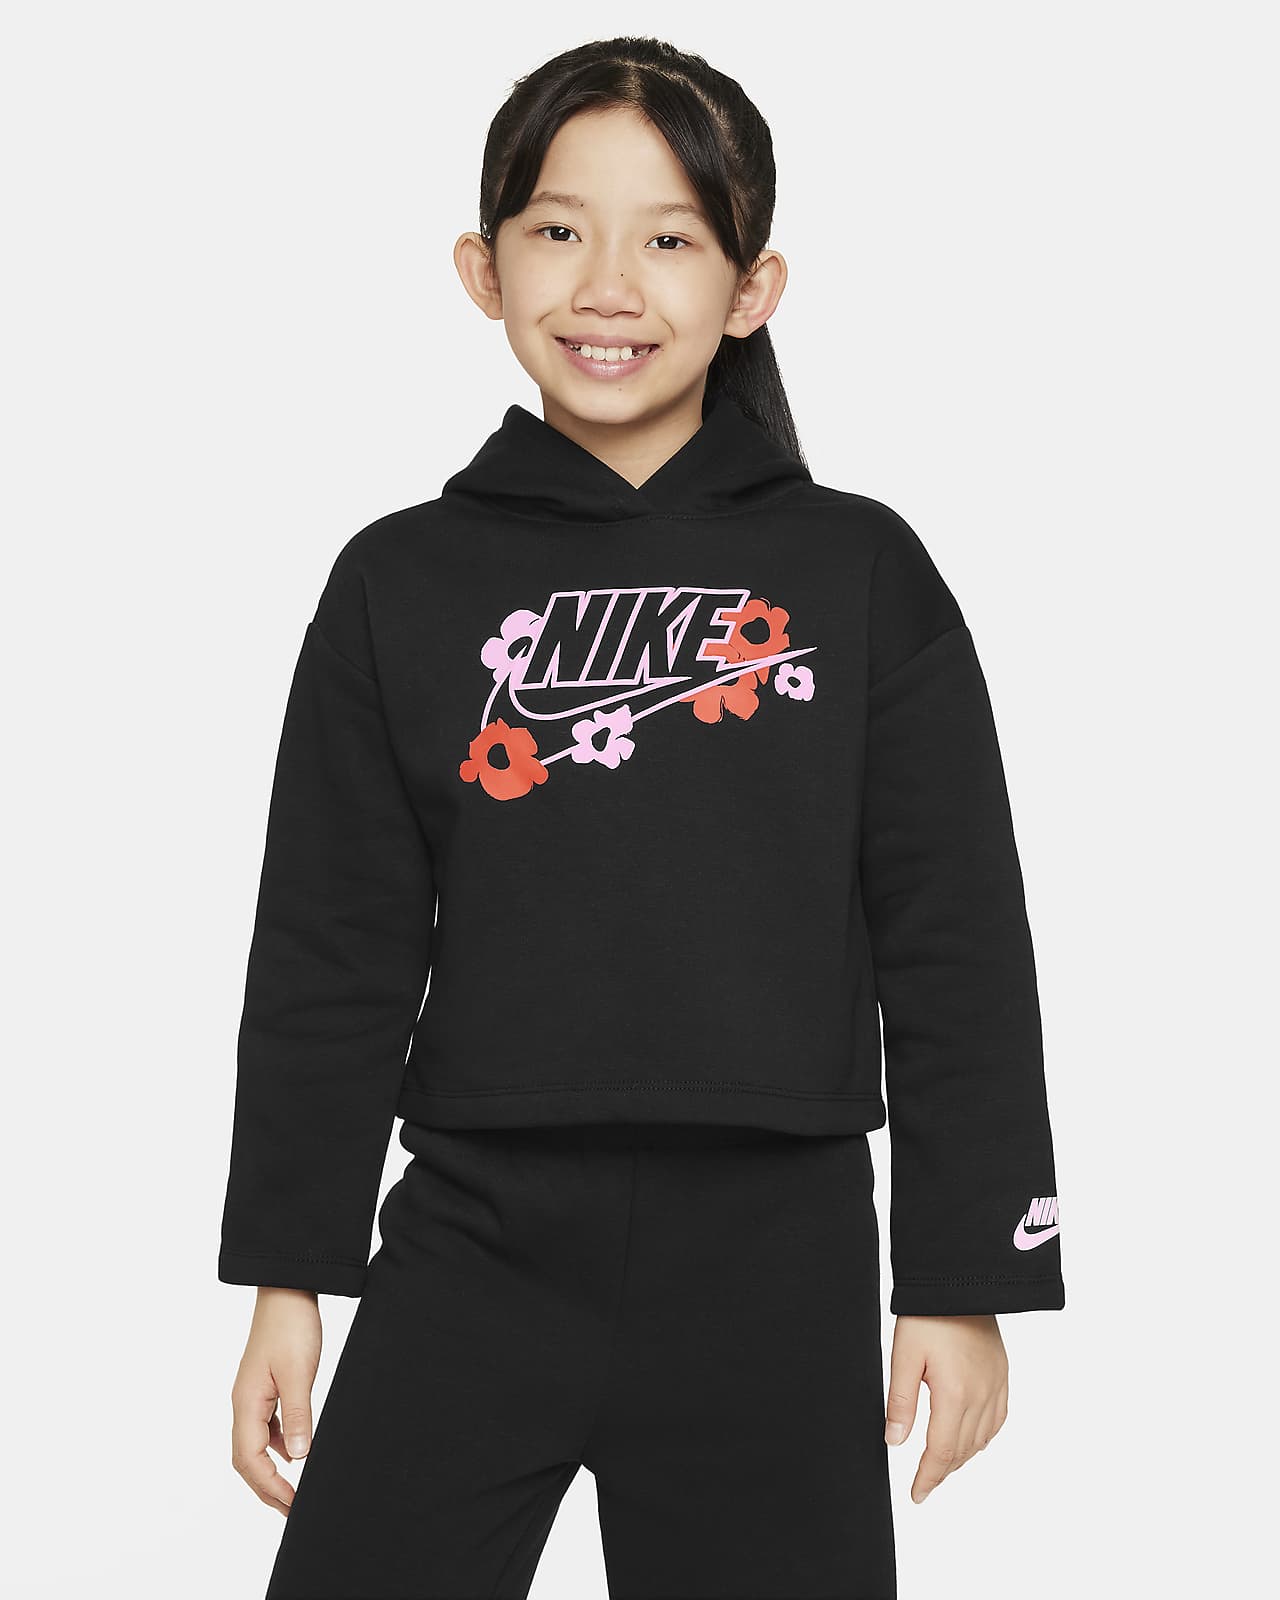 Nike Floral Fleece Dessuadora amb caputxa estampada - Nen/a petit/a